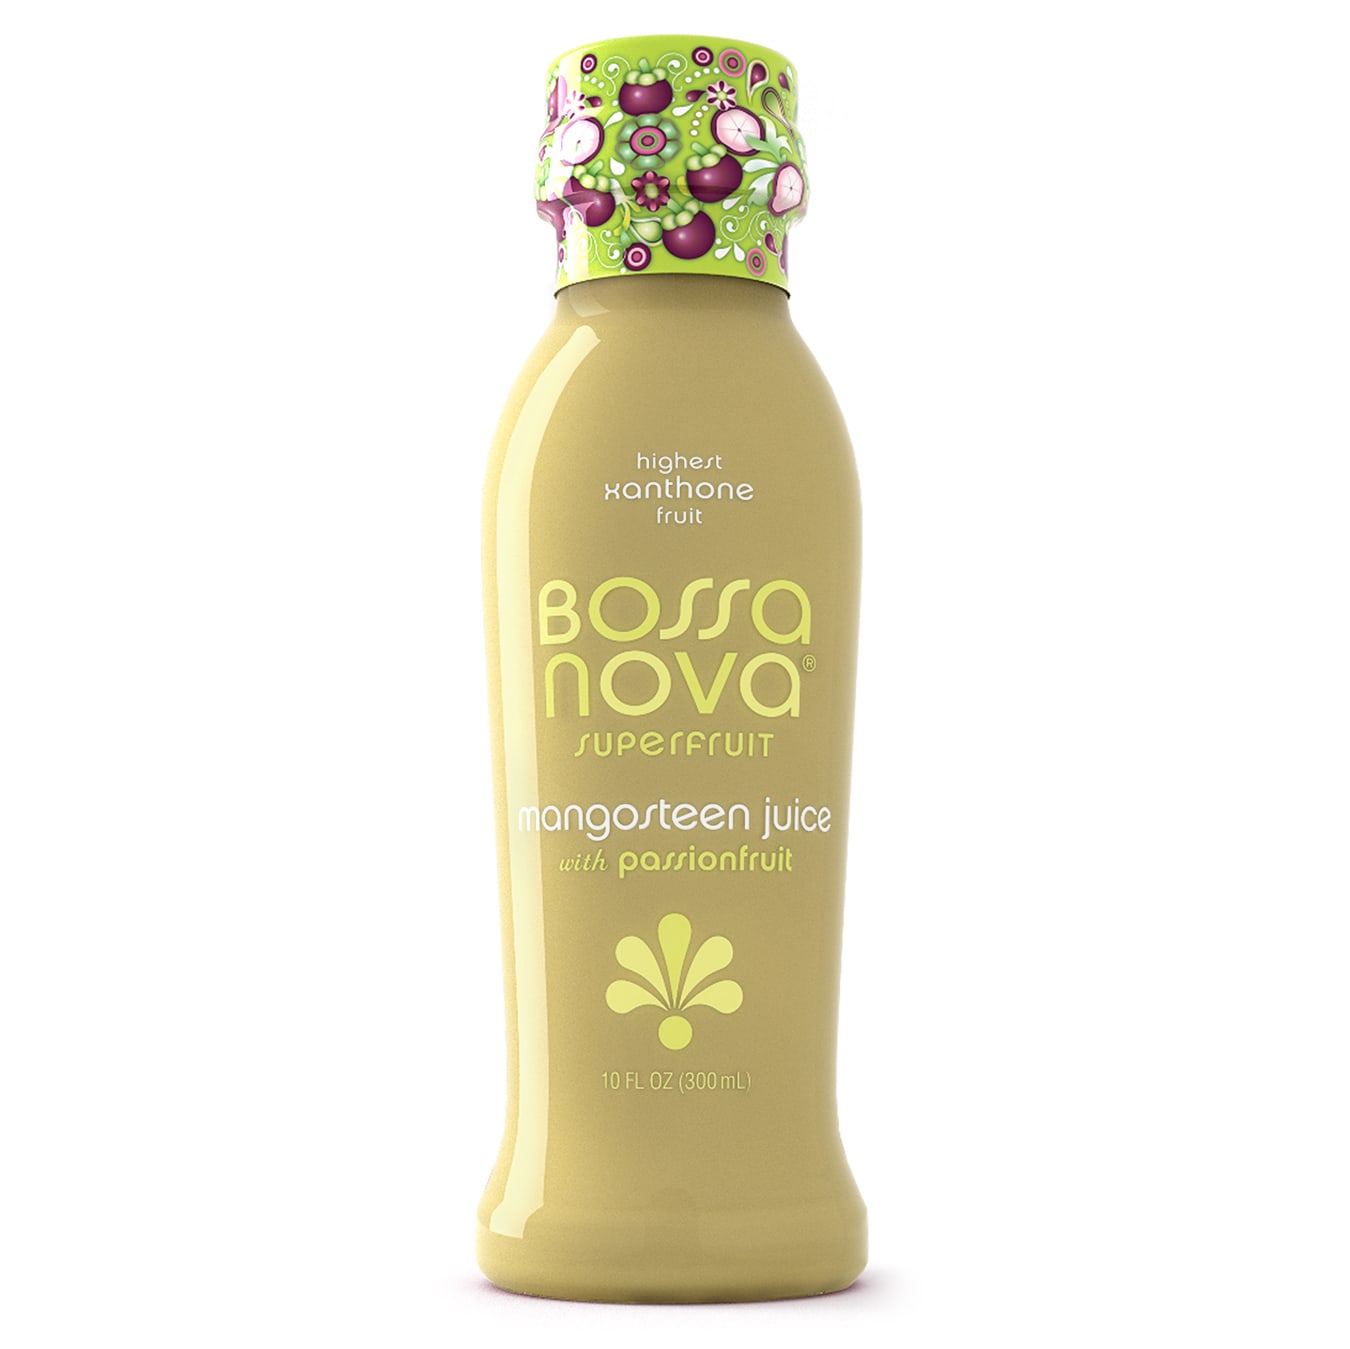 Bossa Nova Super Mangosteen Passionfruit juice bottle packaging design